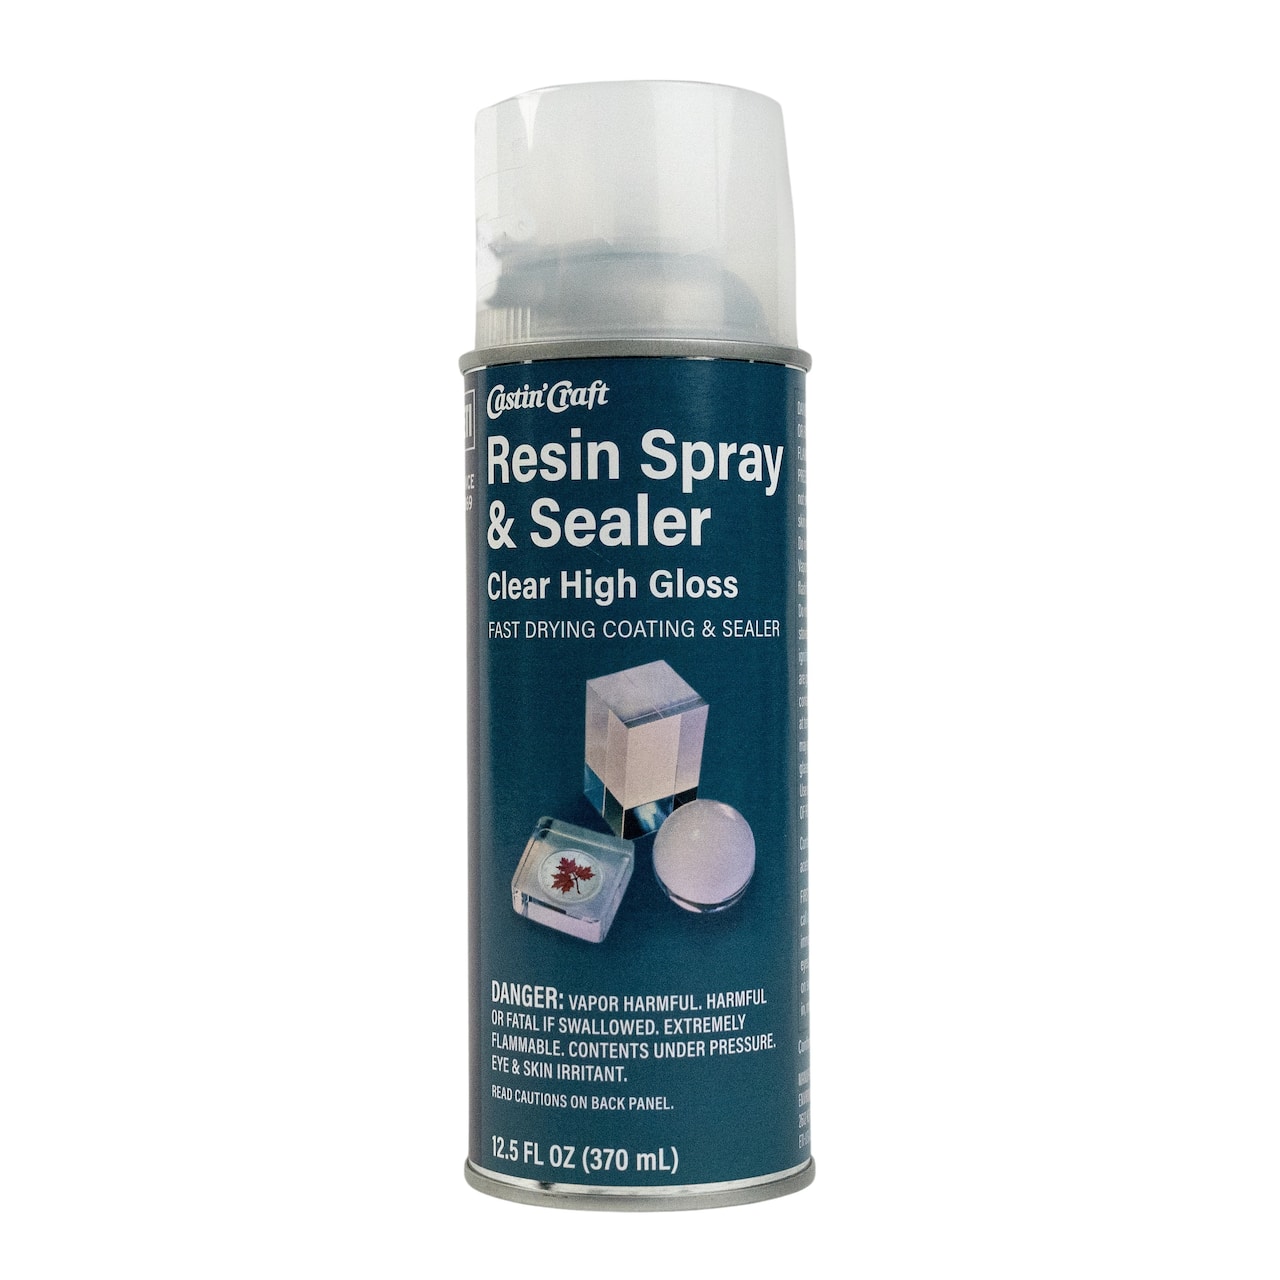 Castin Craft Resin Spray & Sealer, 12.5oz.